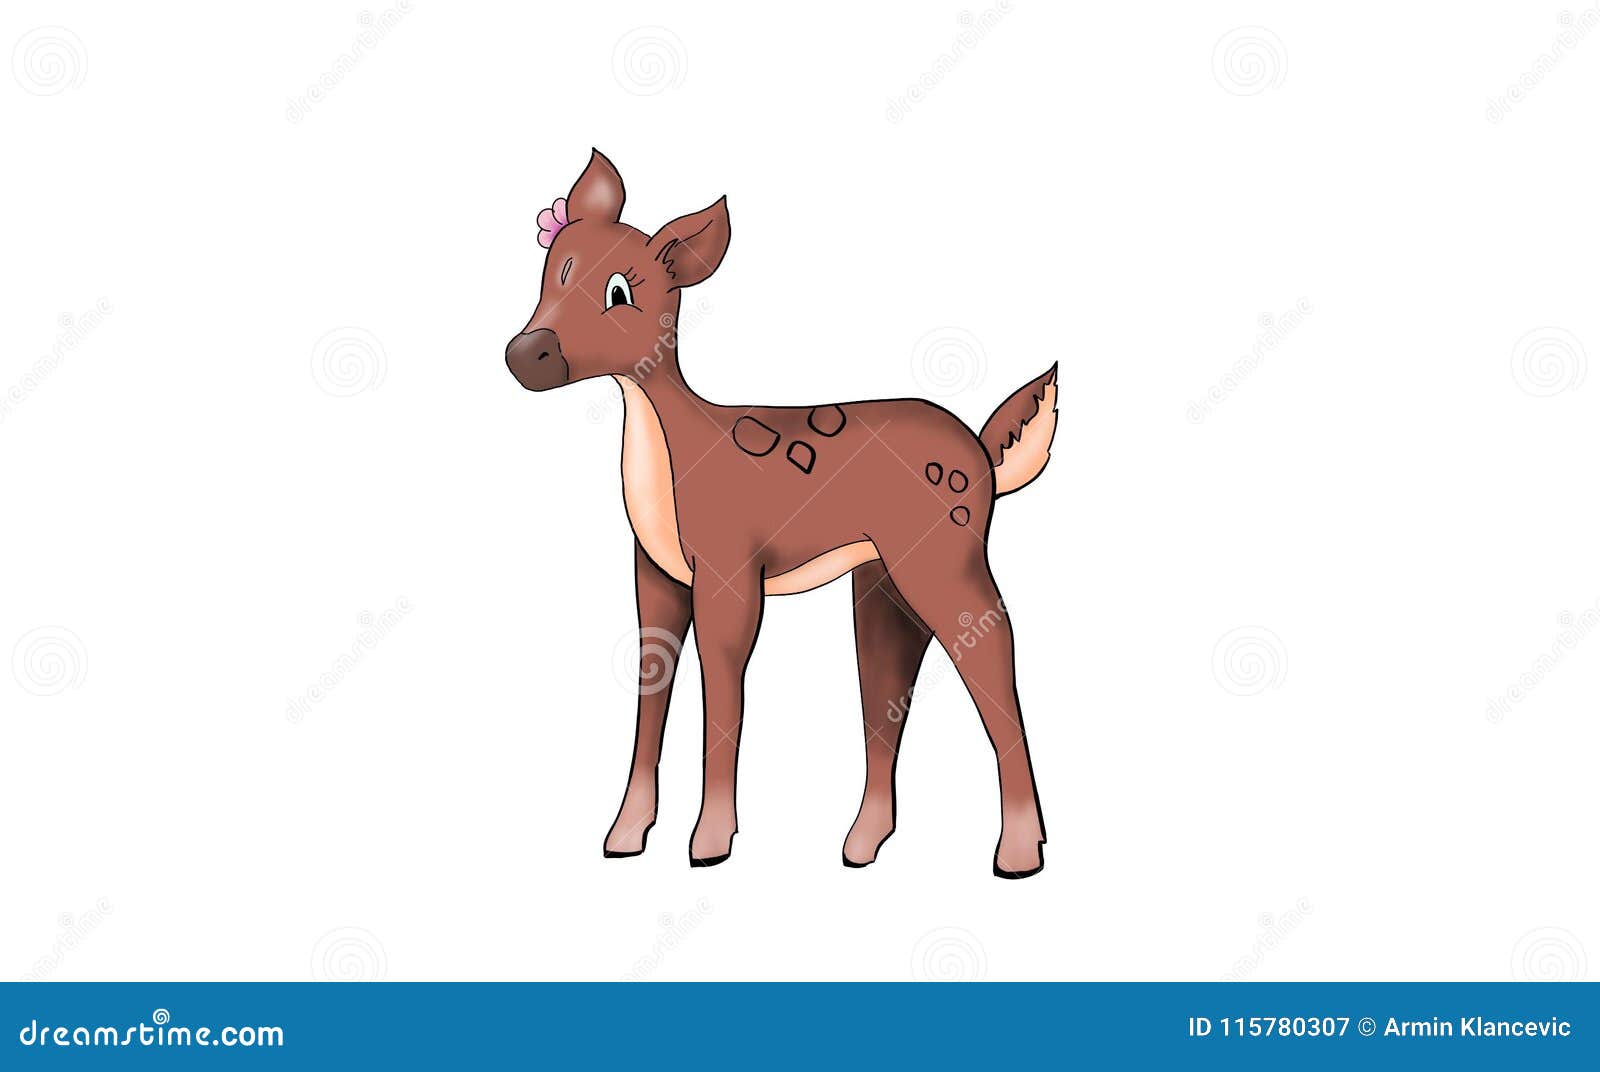 Cute animal deer stock illustration. Illustration of good - 115780307